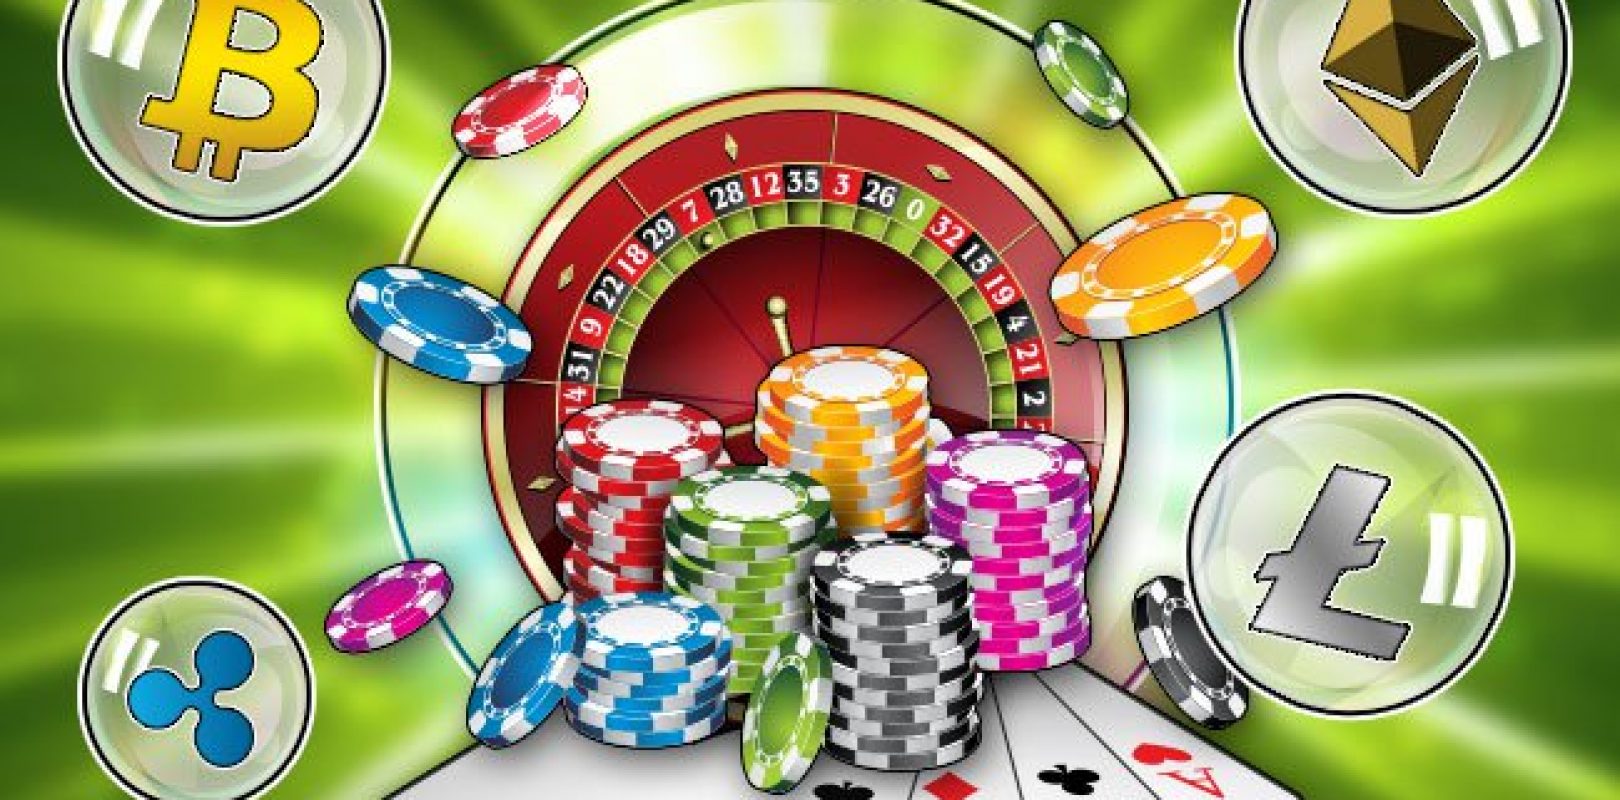 %e6%9c%aa%e5%88%86%e9%a1%9e - - Can you own a slot machine in alabama, the white lion casino game at worley idaho